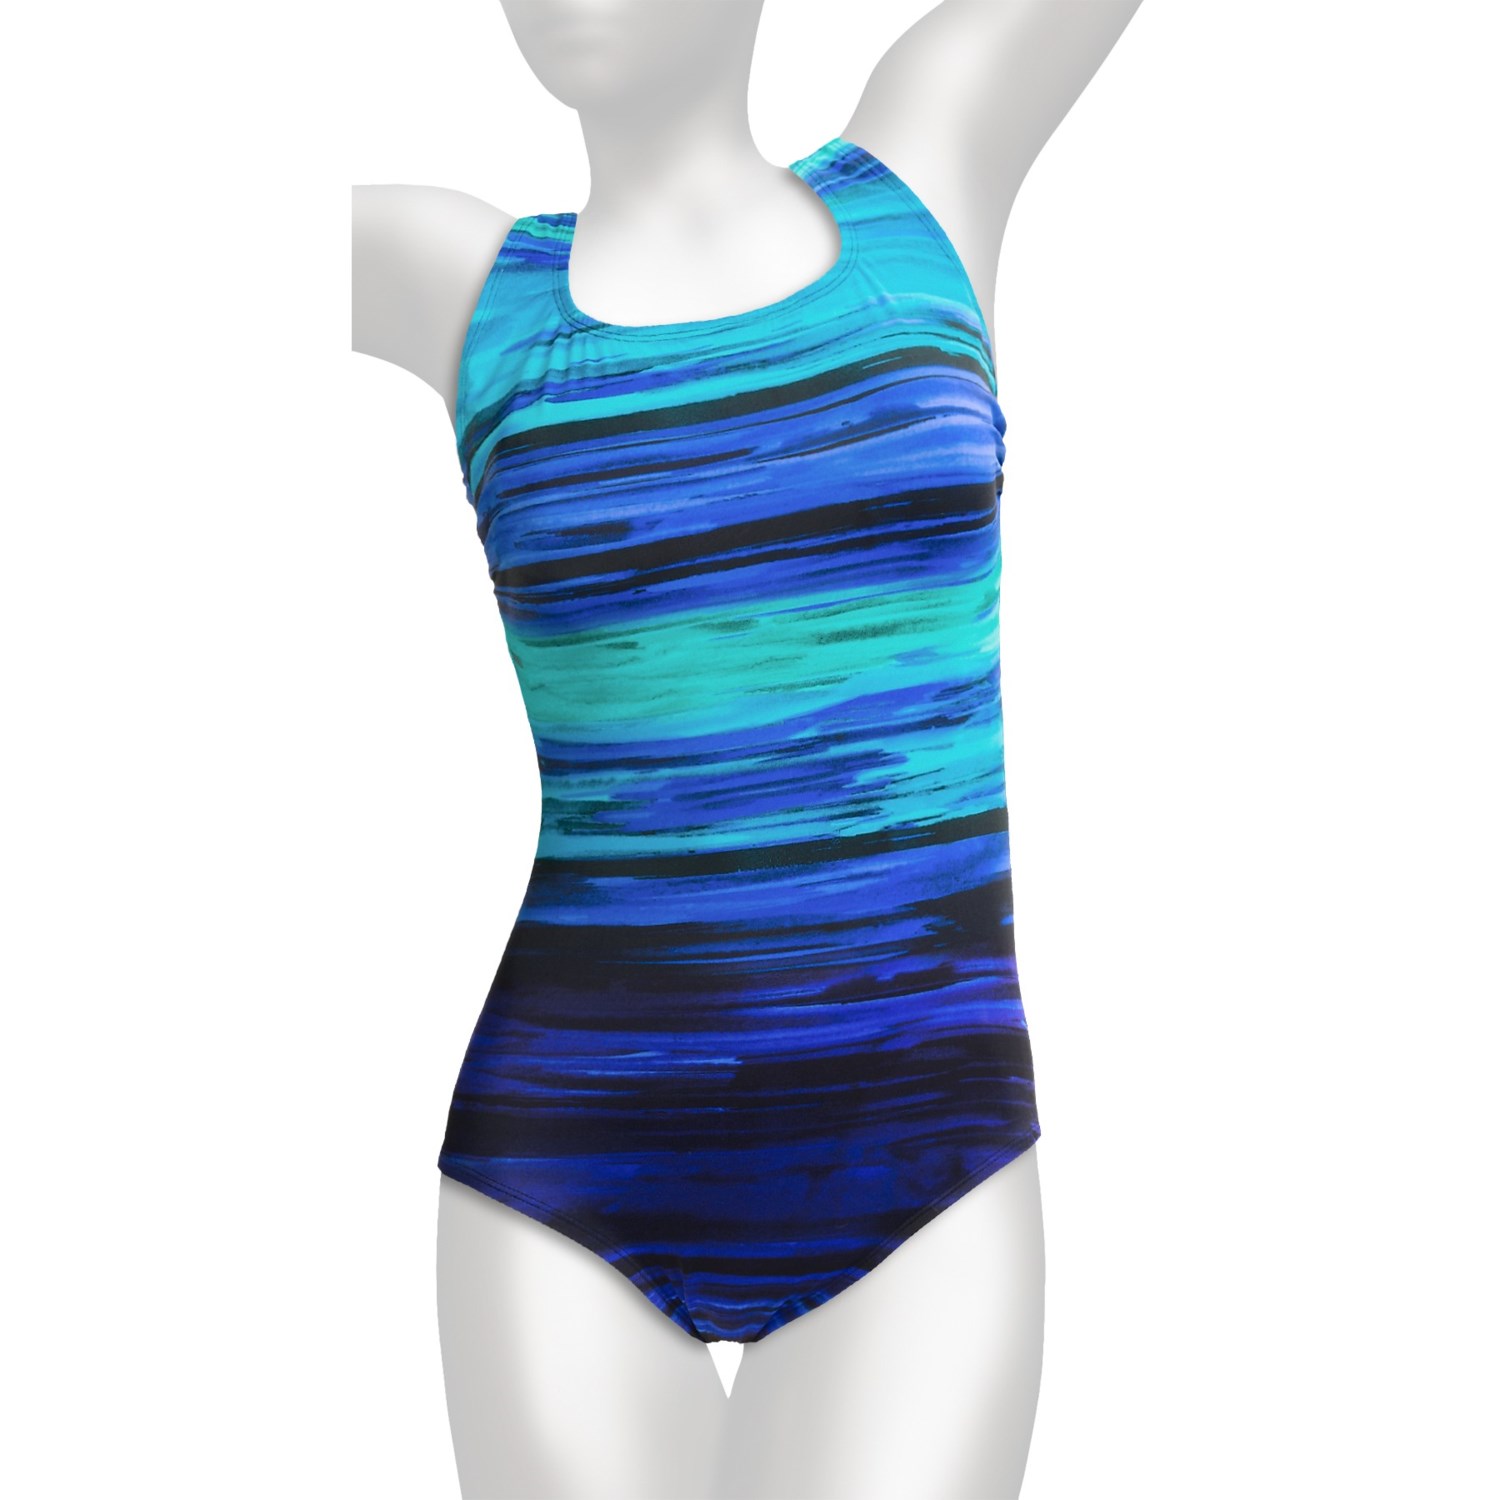 Longitude Waterway Swimsuit (For Plus Size Women) - Save 55%